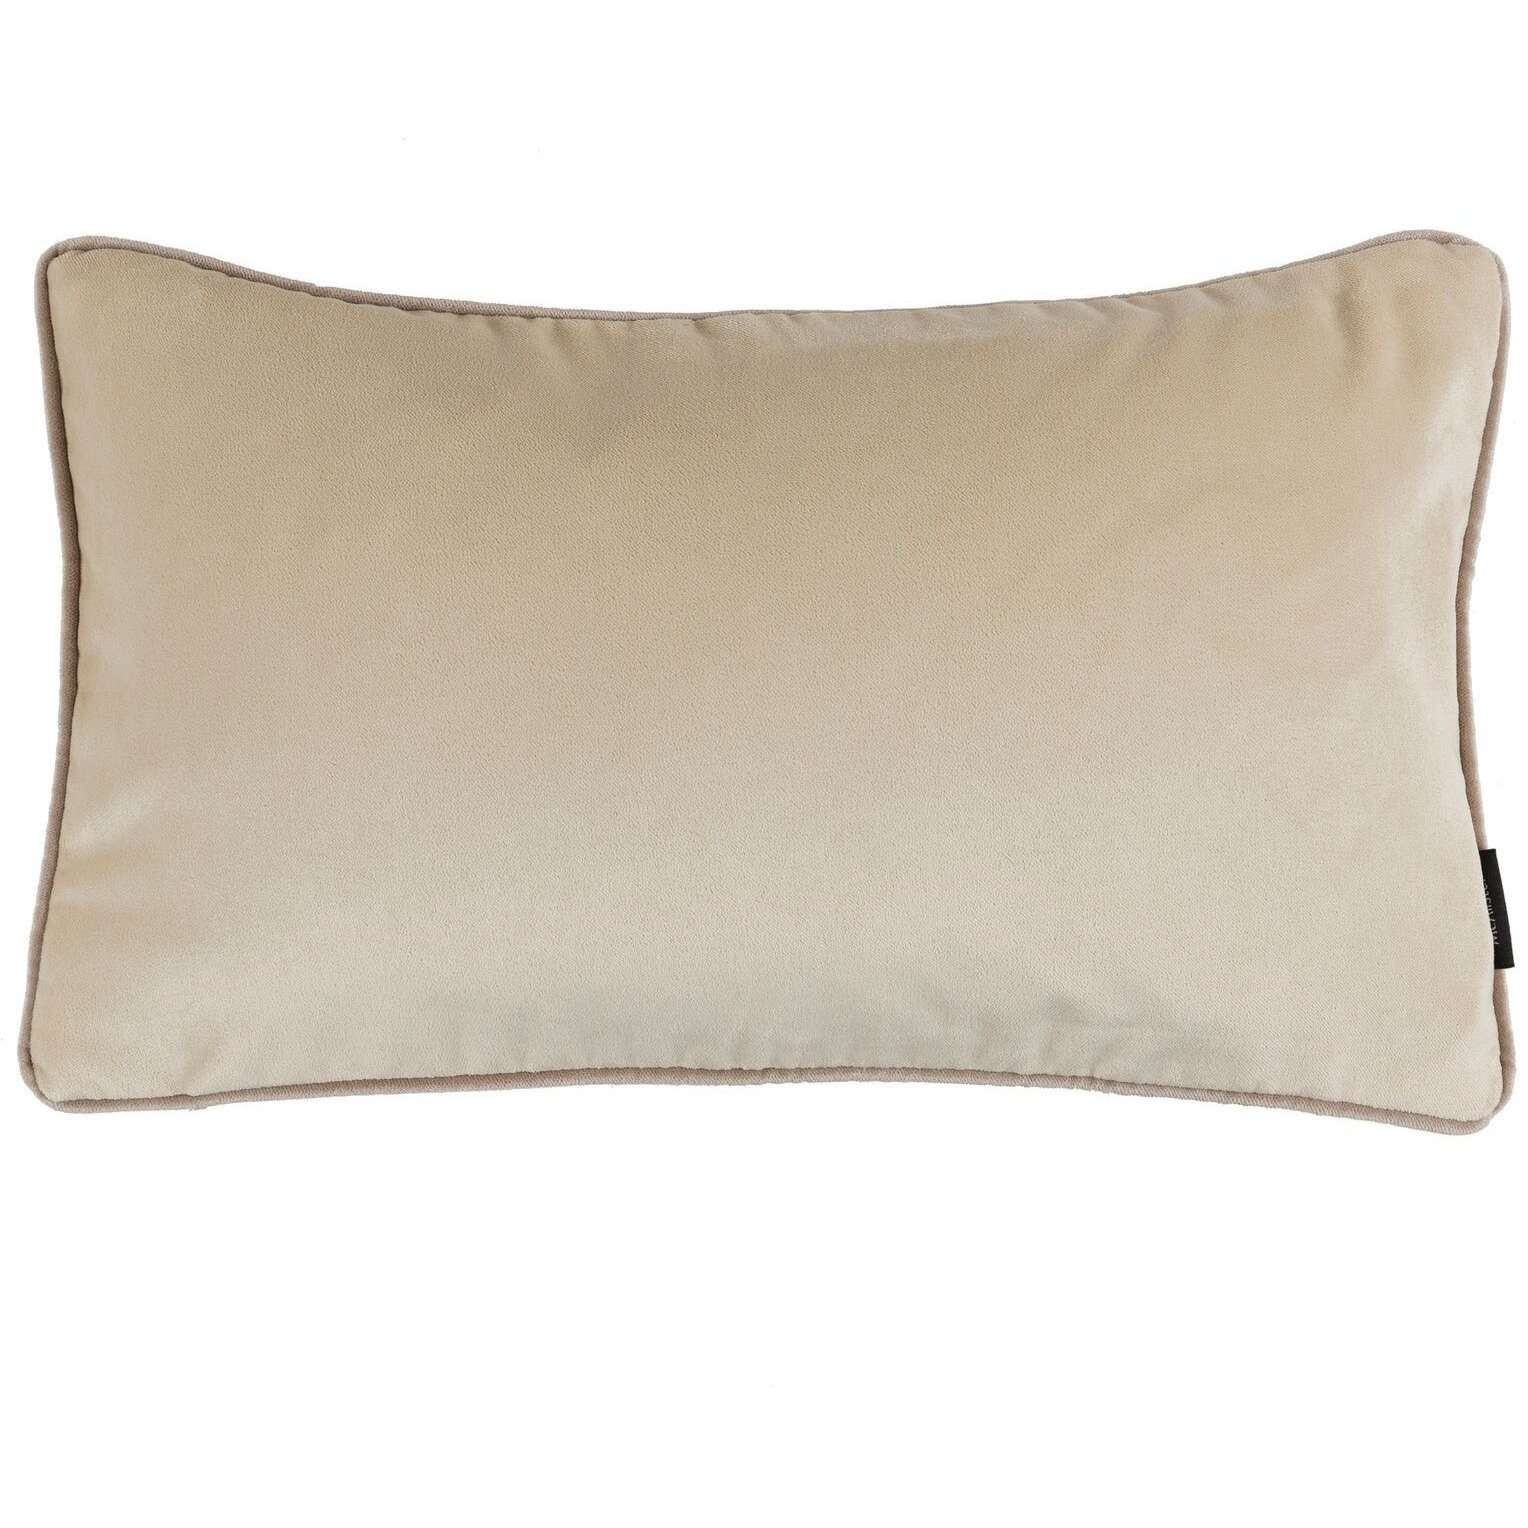 McAlister Textiles Matt Champagne Gold Piped Velvet Pillow Pillow Cover Only 50cm x 30cm 